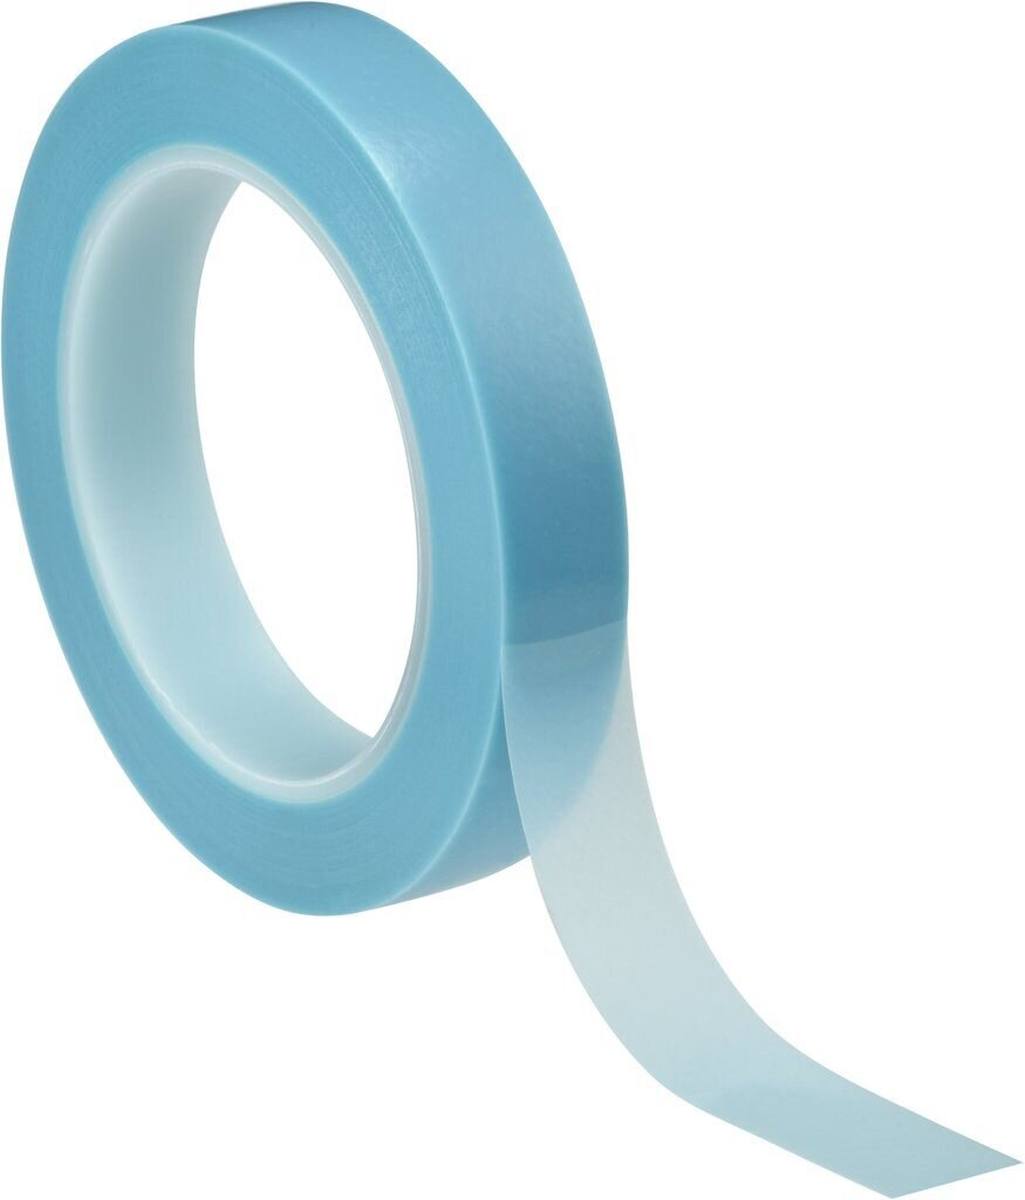 3M Scotch Hochtemperatur-Farblinienband 4737 T, Blau, transparent, 50 mm x 33 m, 0,13 mm